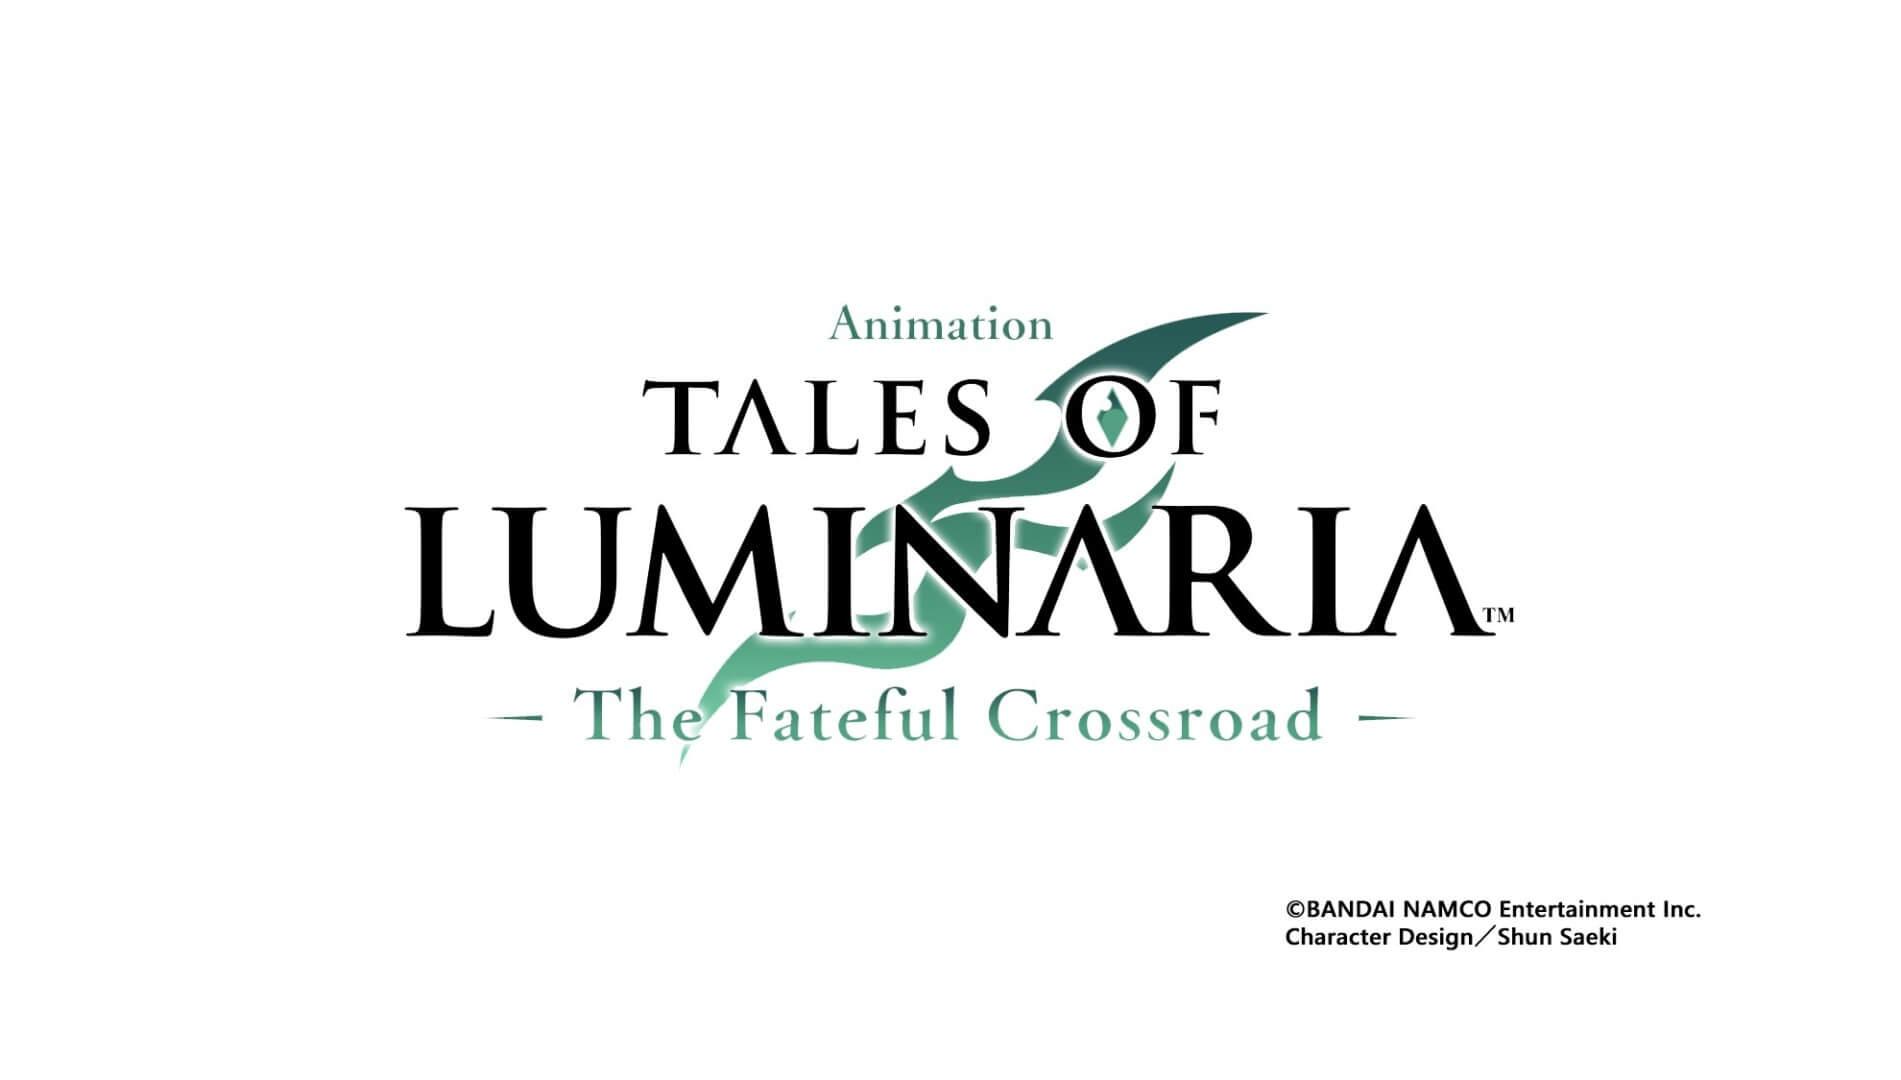 TALES OF LUMINARIA The Fateful Crossroad – Animation